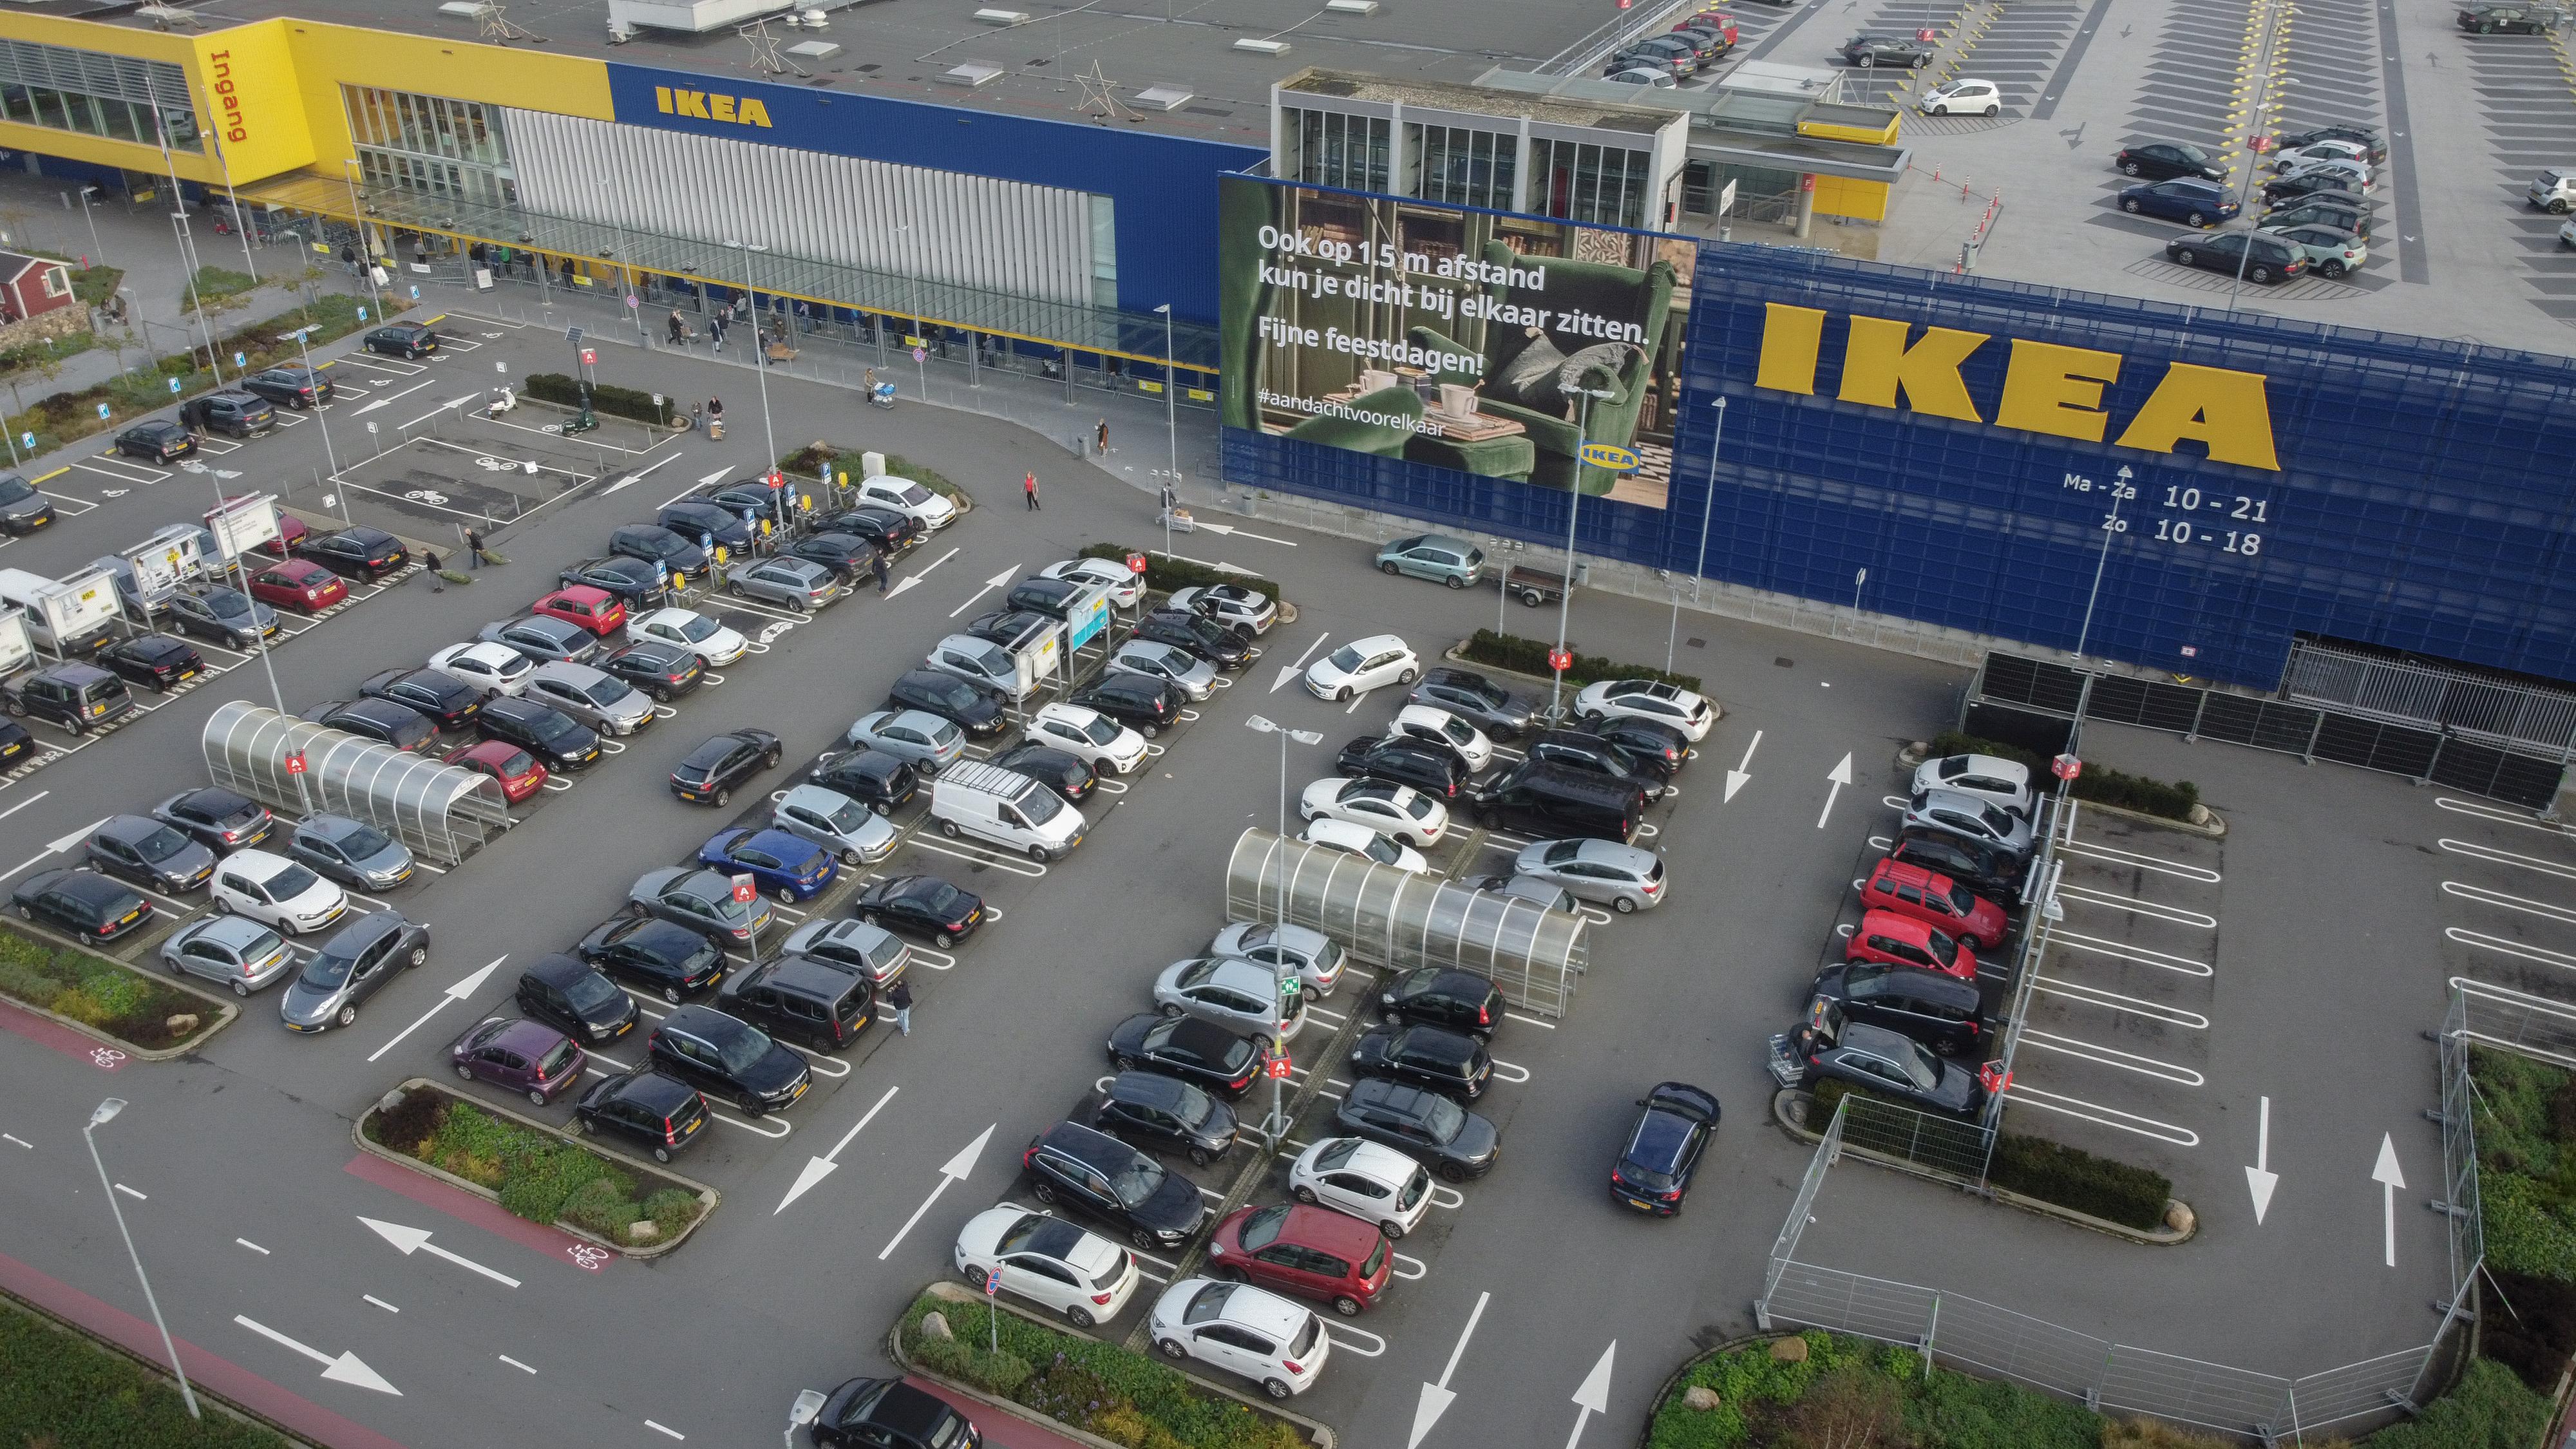 Grazen Smeltend Silicium Ikea: bij ons toch niet winkelen op afspraak - De Limburger Mobile